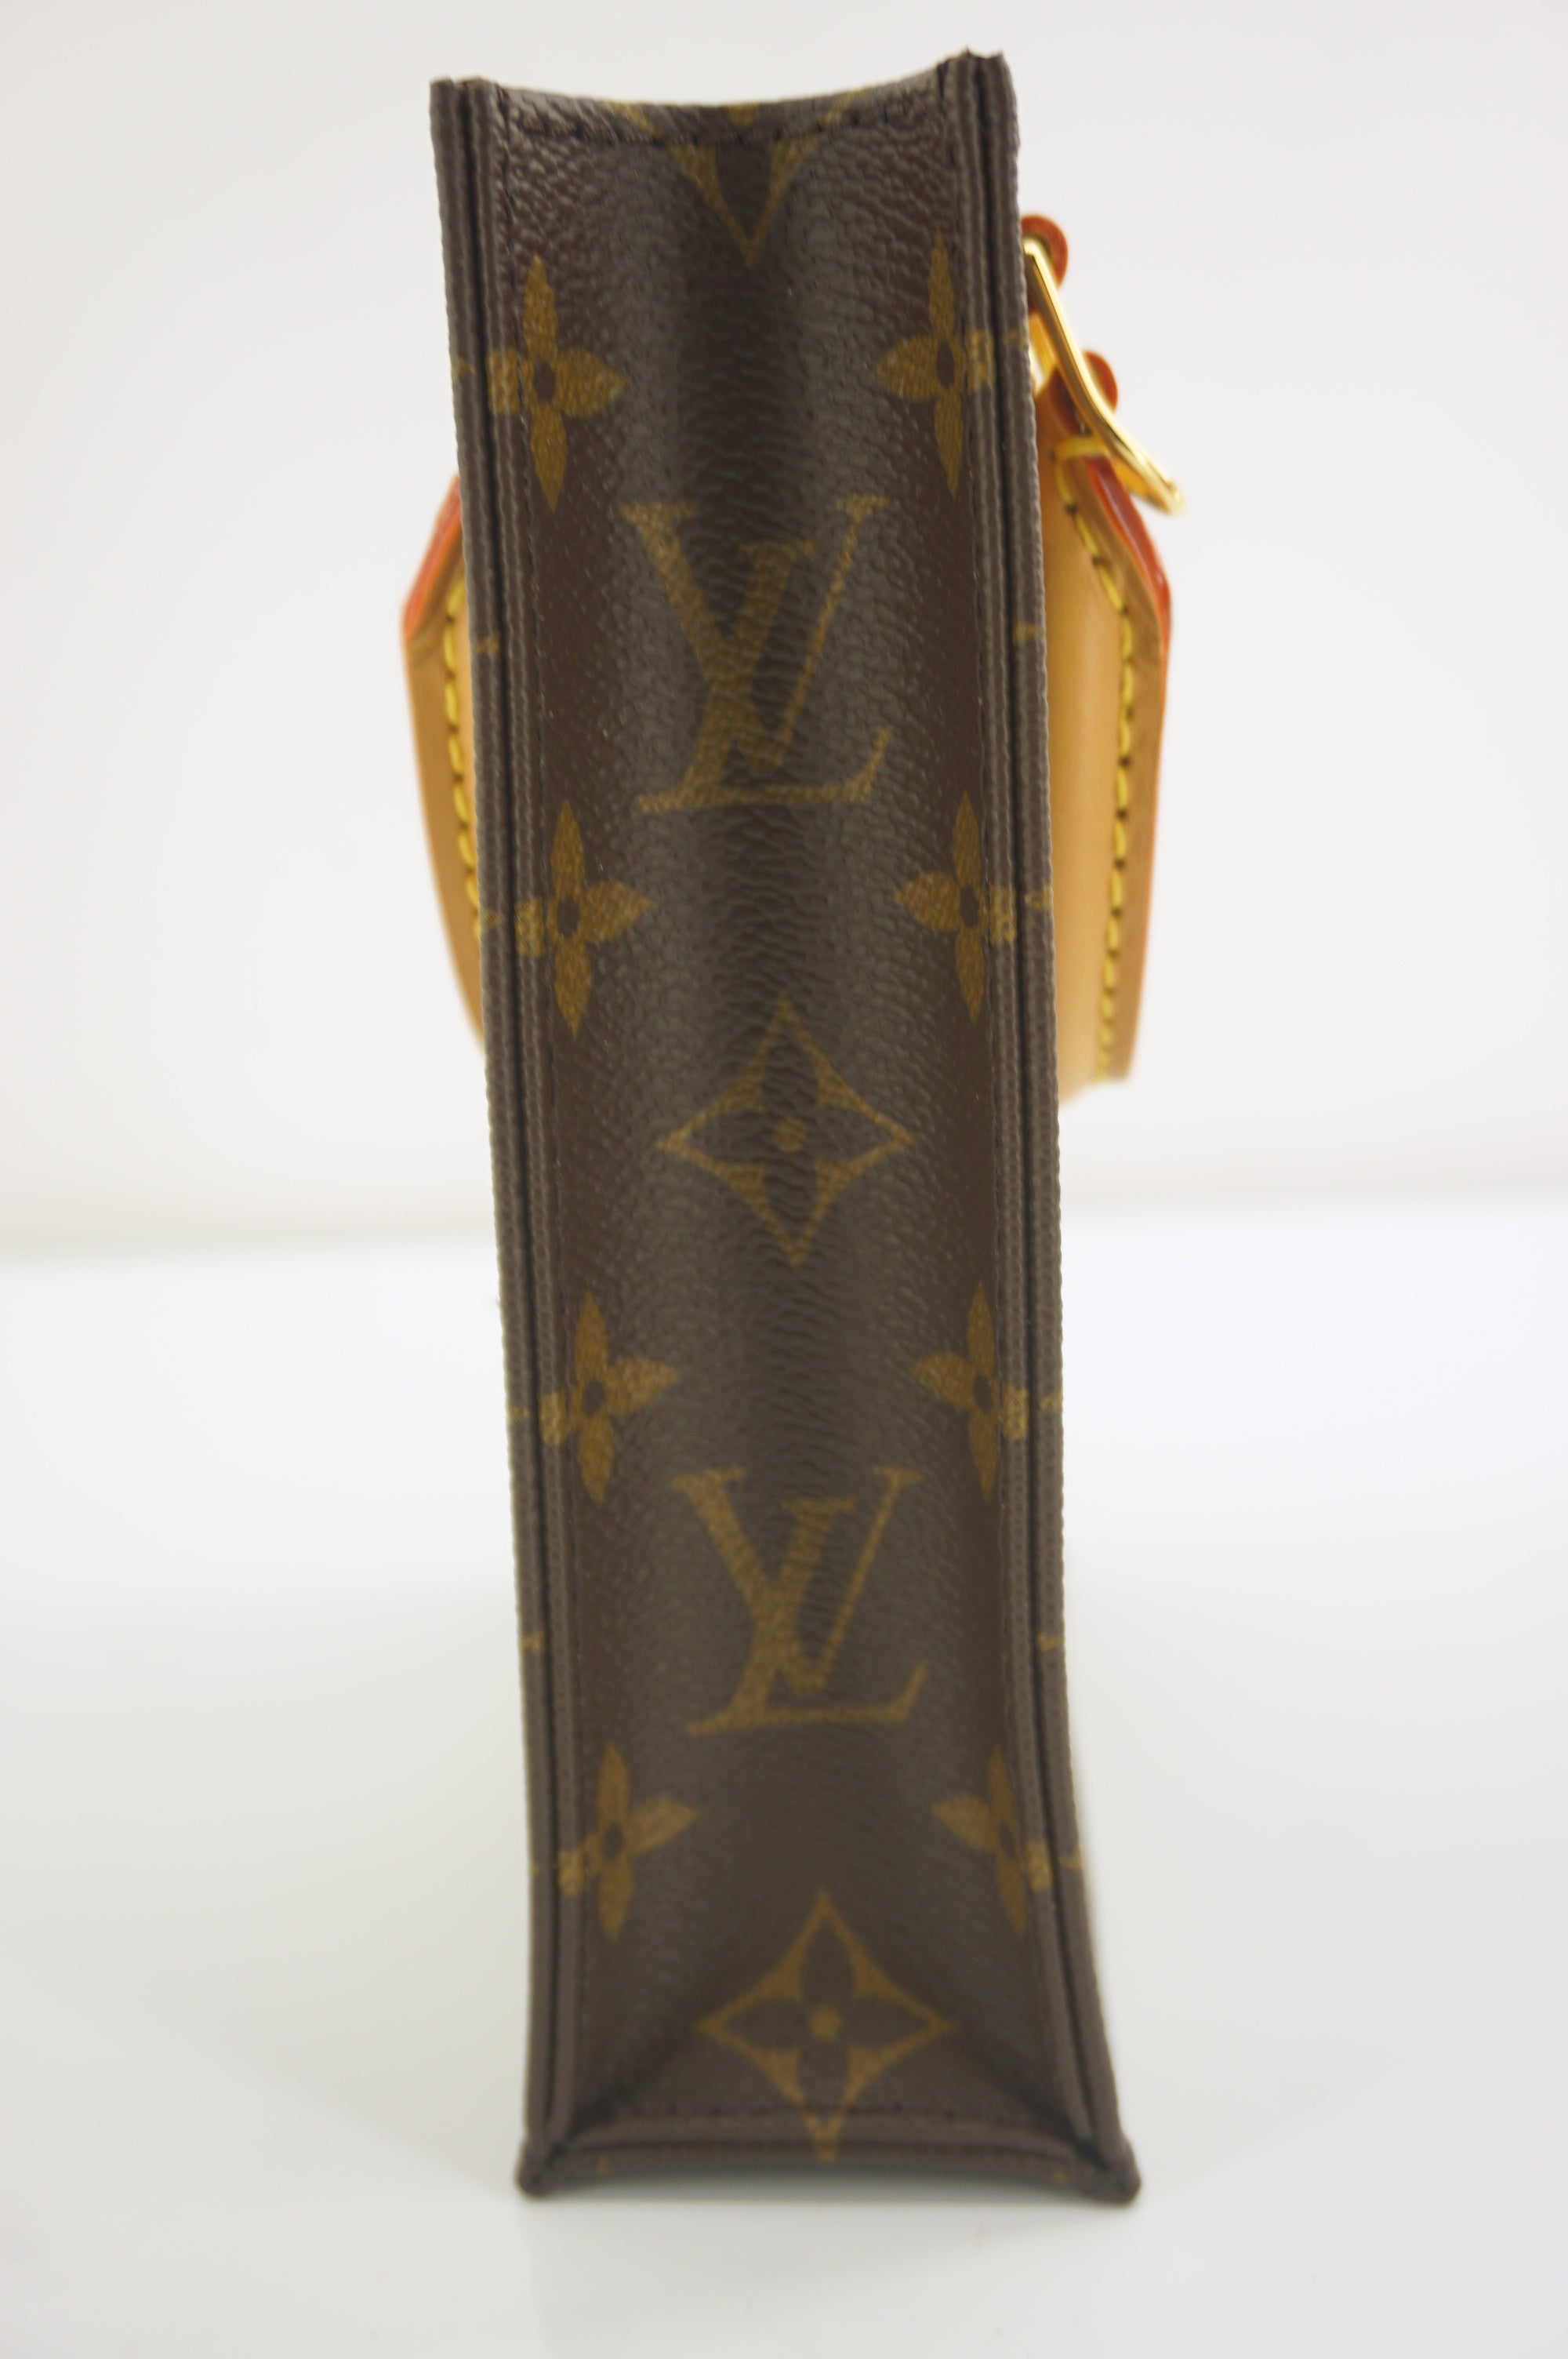 Louis Vuitton Mini Sac Plat Petit Monogram Brown Coated Canvas Crossbody Bag NWT